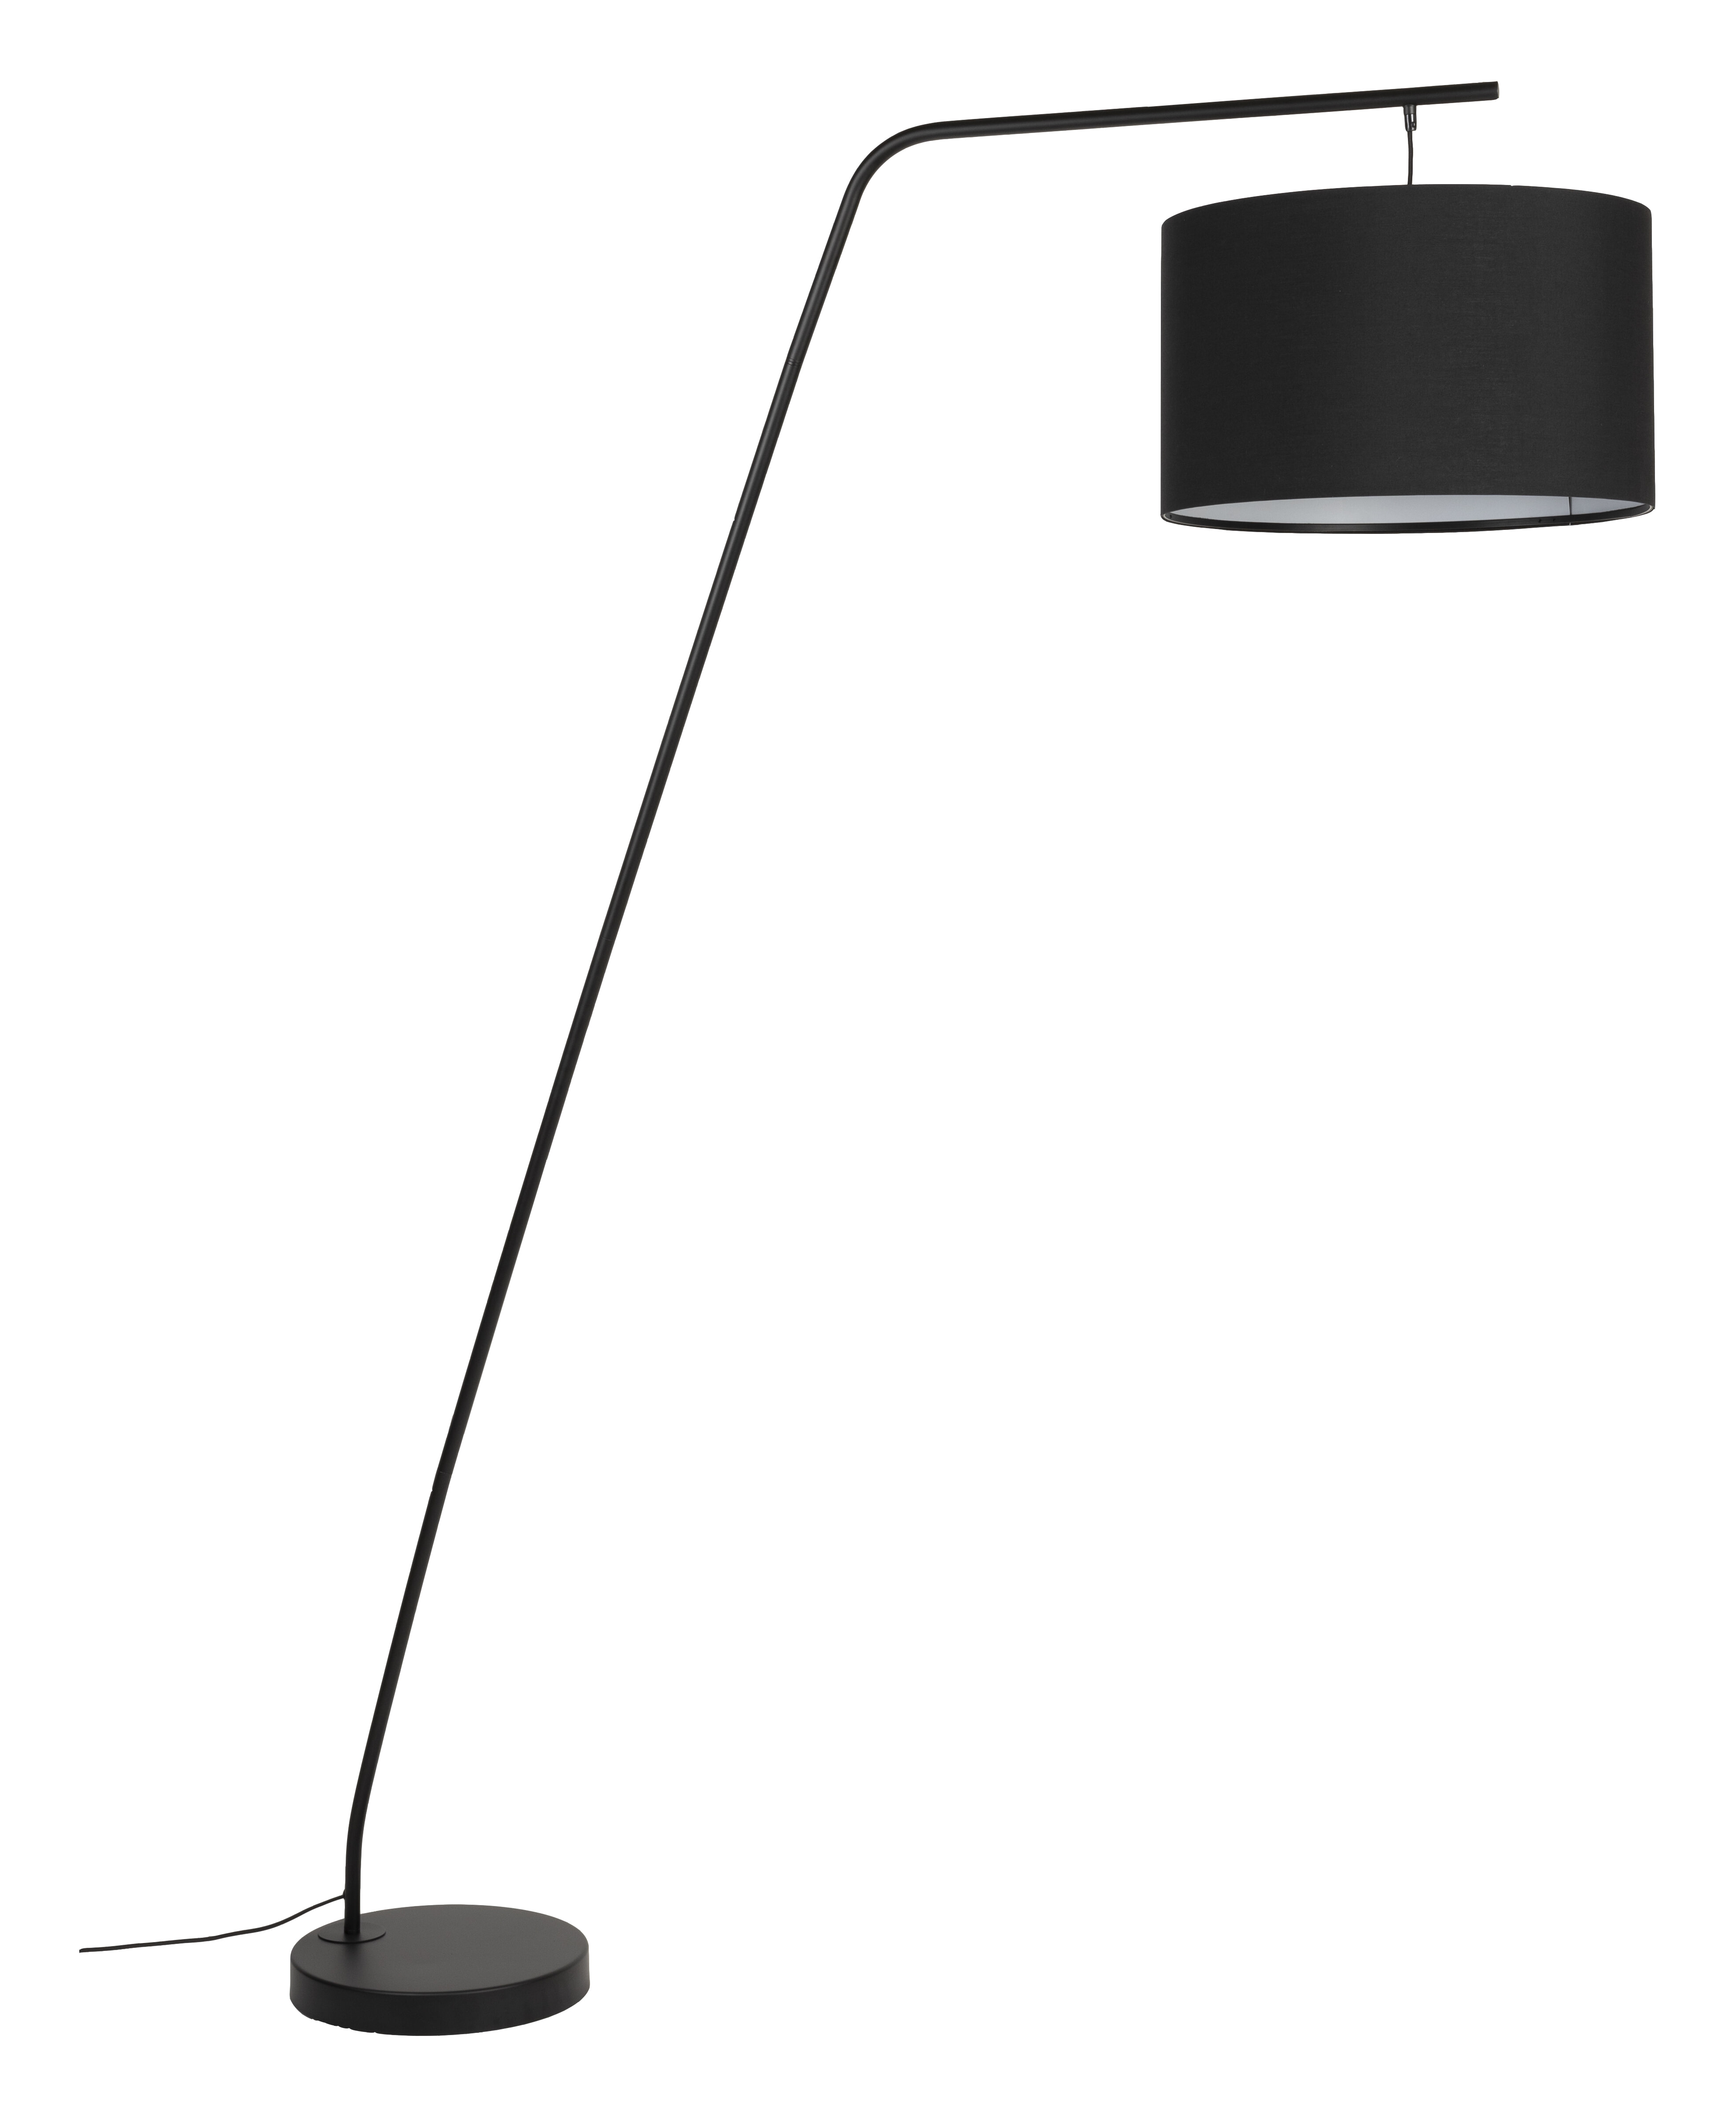 ZILT Vloerlamp Laniece 224cm hoog - Zwart